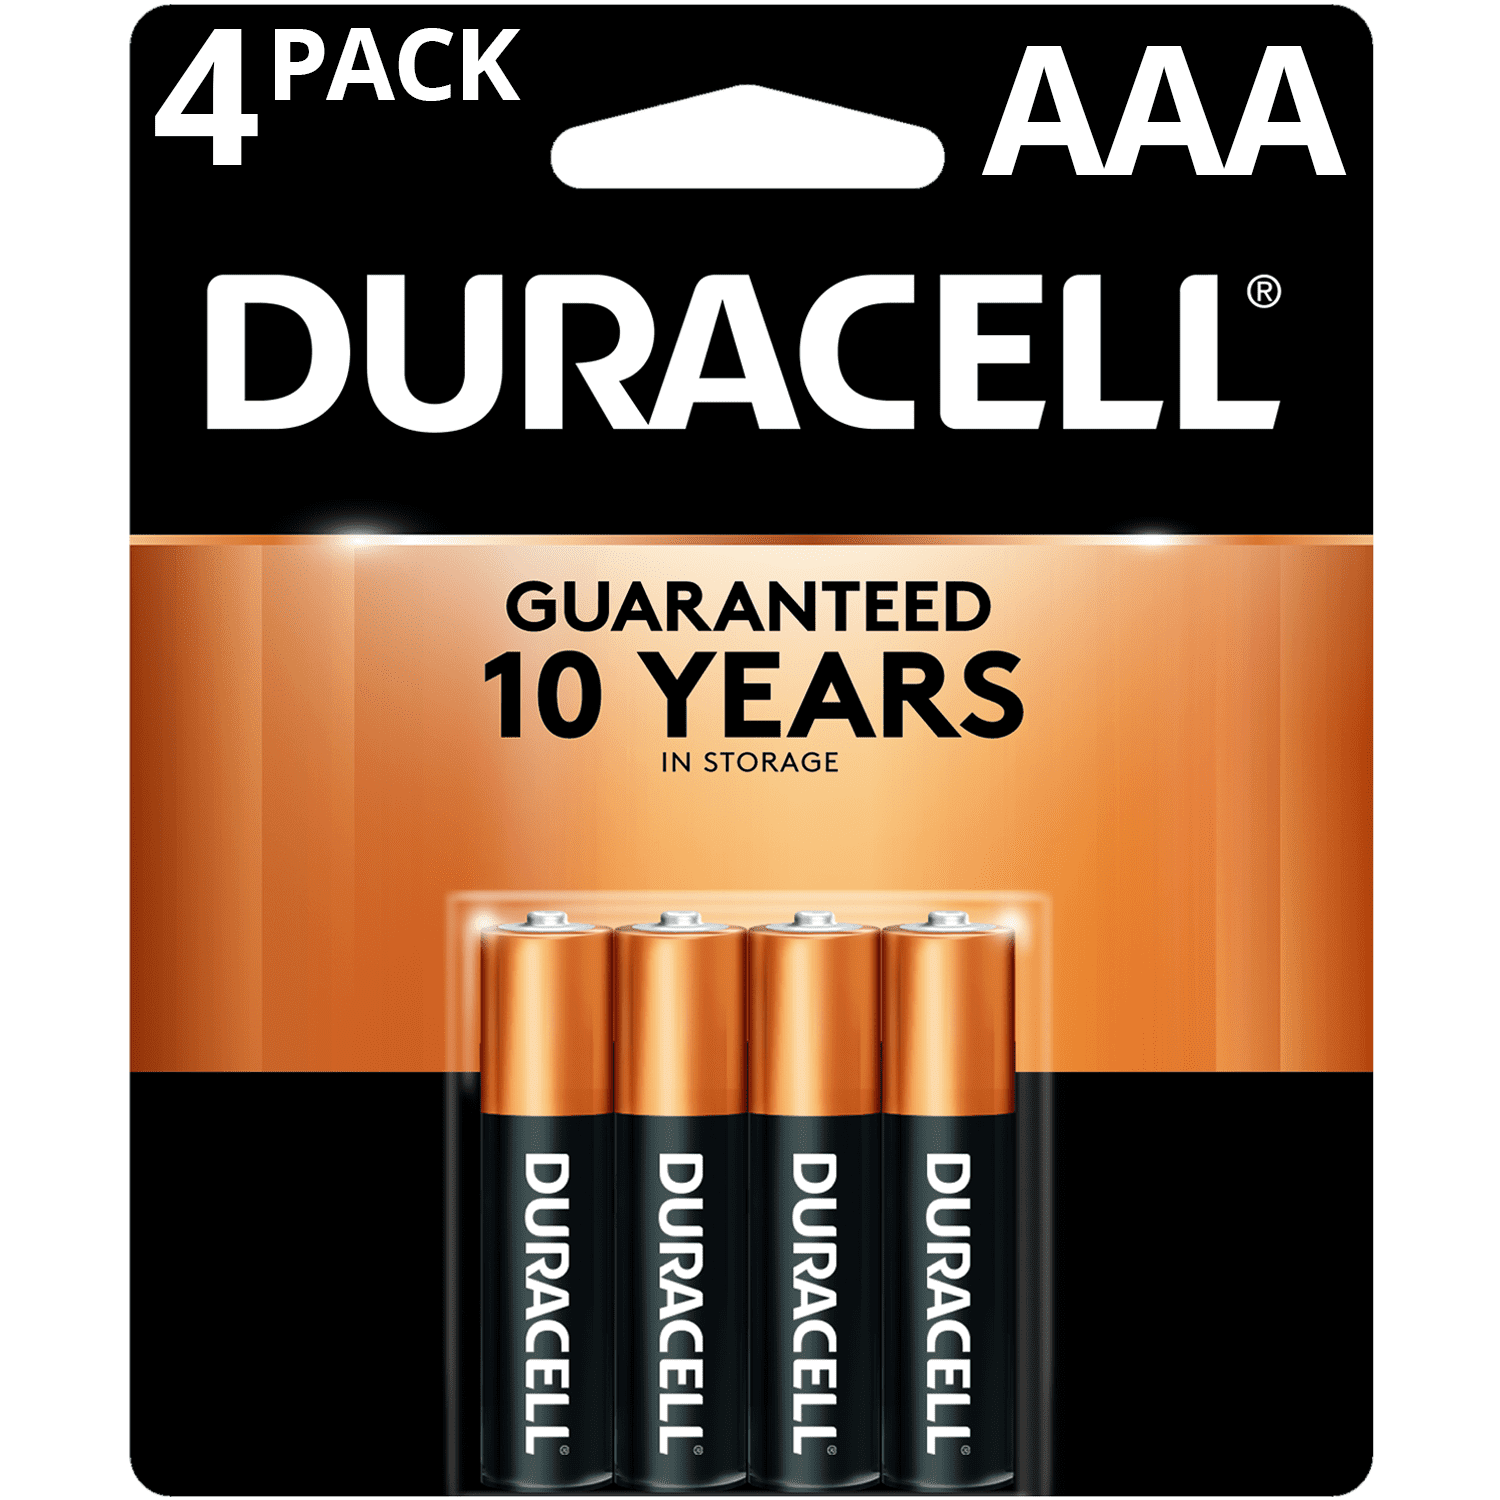 box of 10 Duracell D Industrial Alkaline Batteries